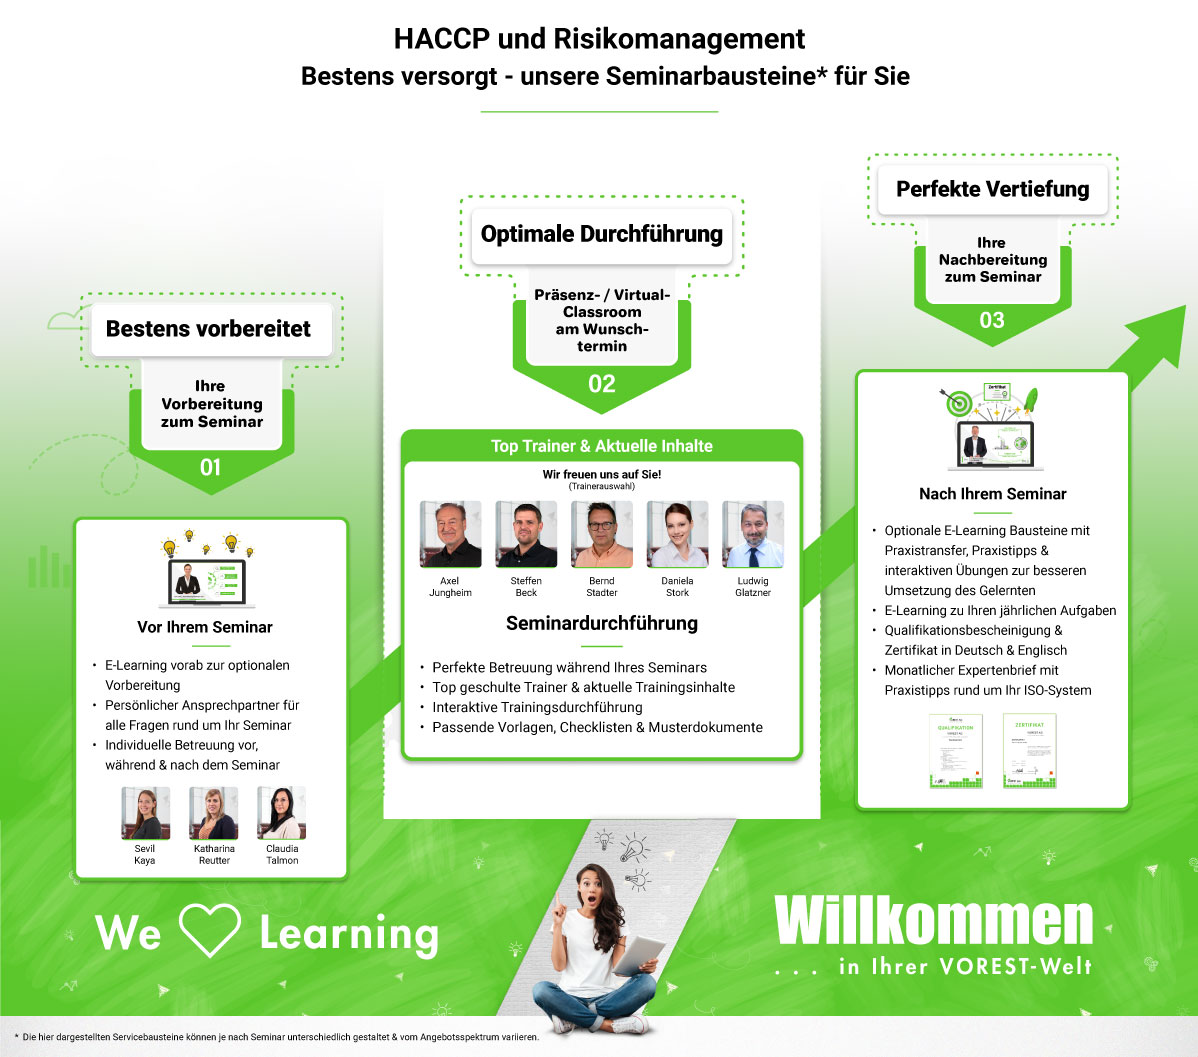 HACCP und Risikomanagement